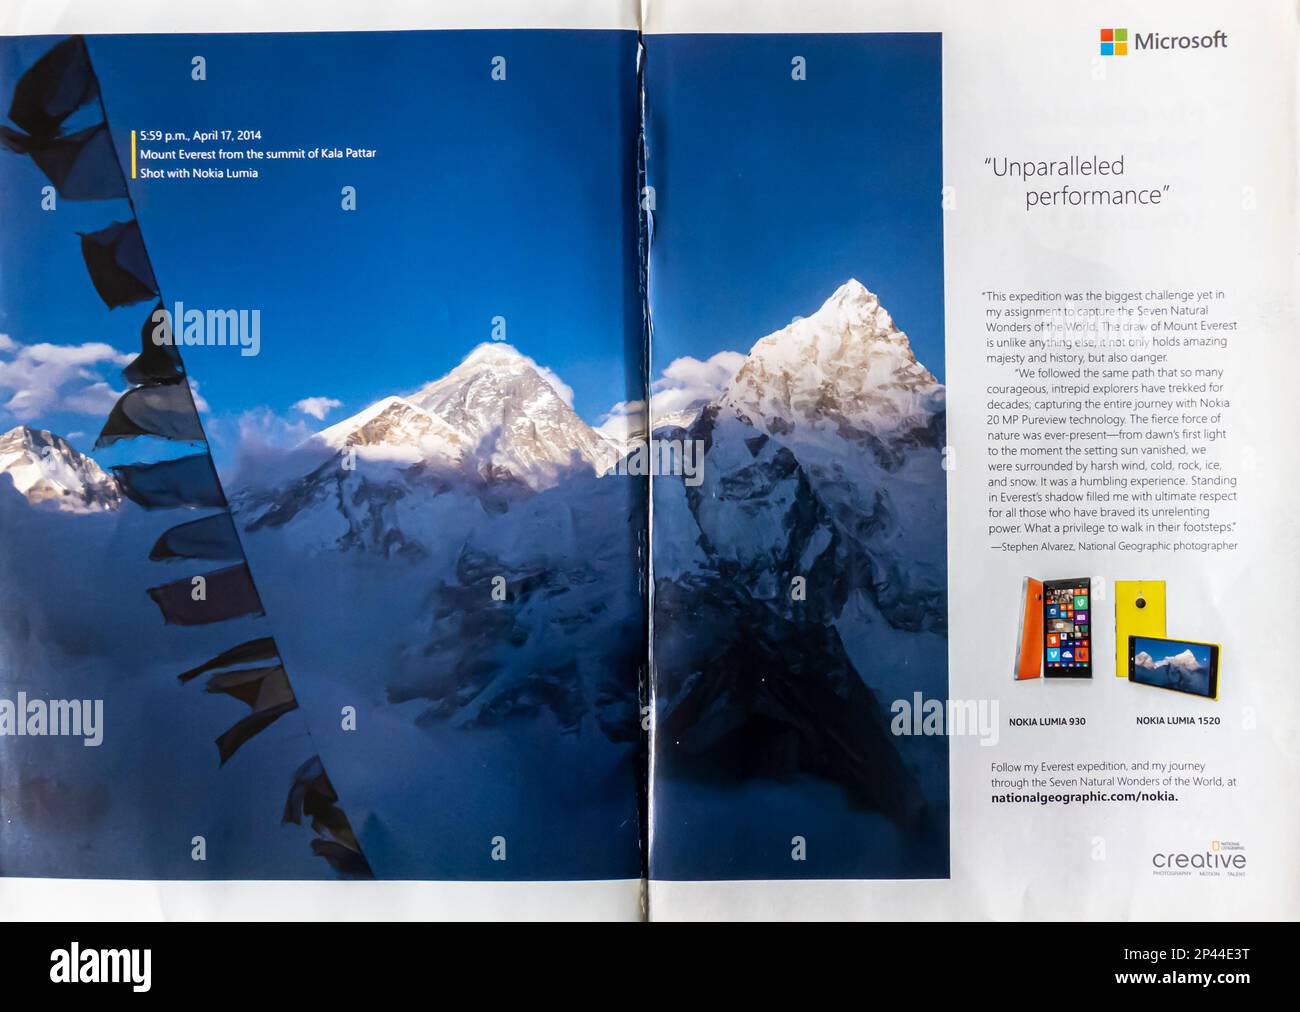 Microsoft- Nokia Lumia smartphone advert in a Natgeo magazine July 2014 Stock Photo